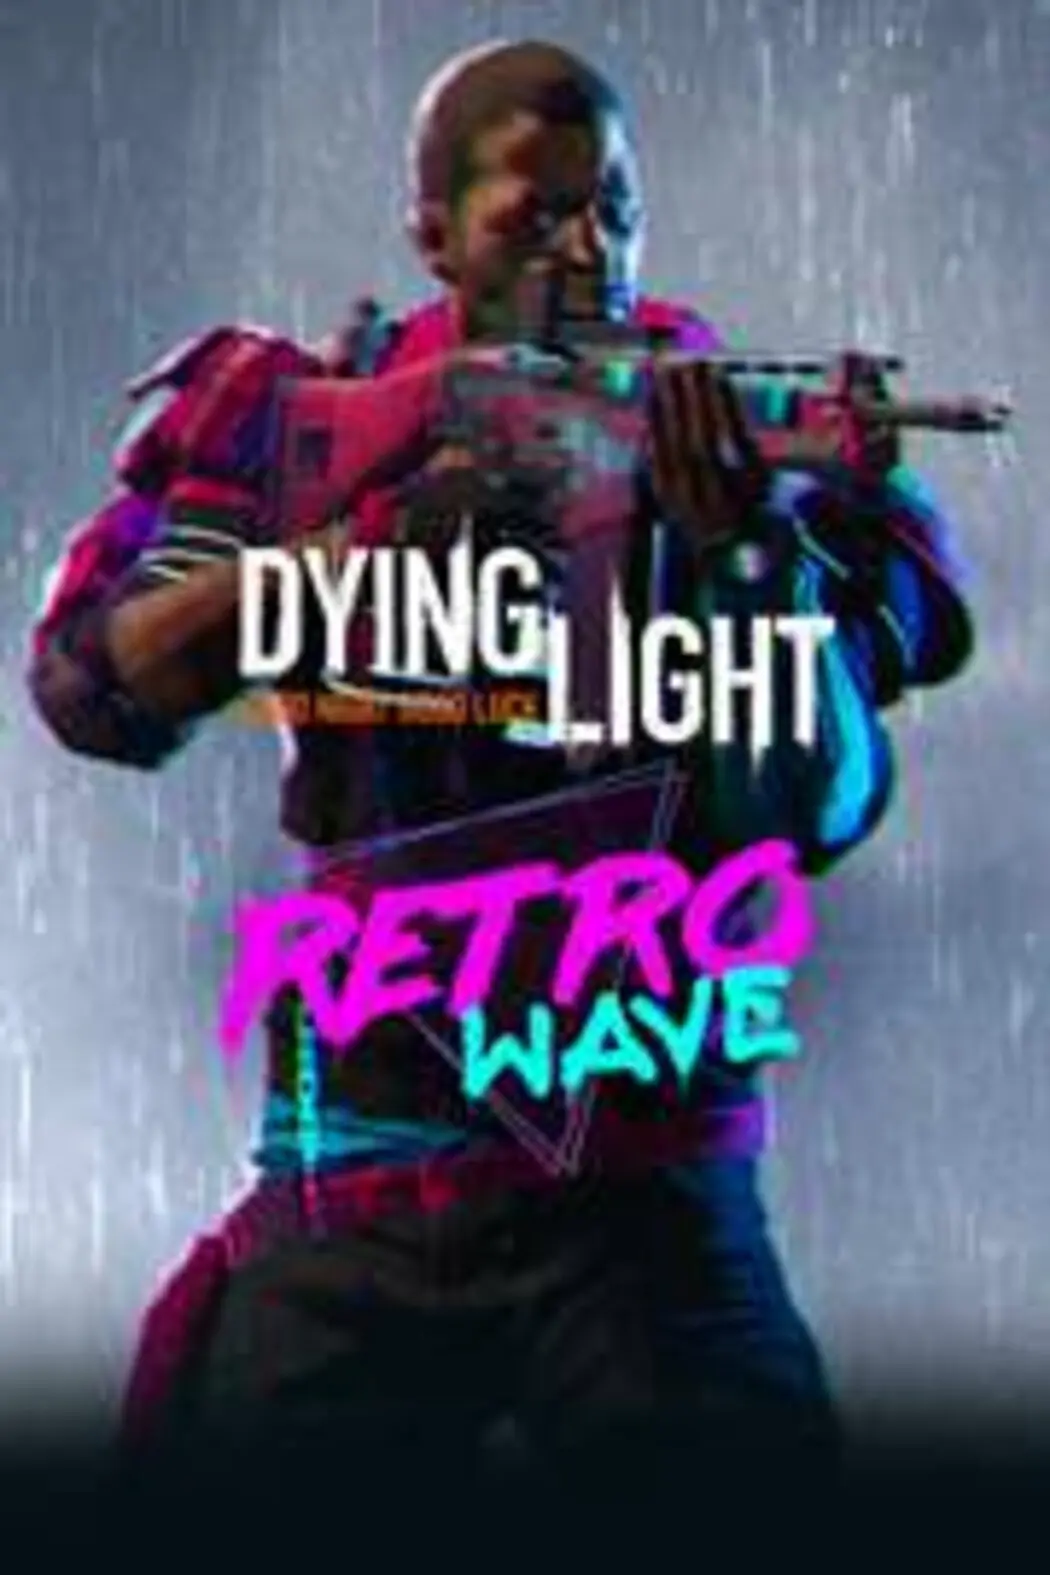 Dying Light - Retrowave Bundle DLC (PC / Mac / Linux) - Steam - Digital Code